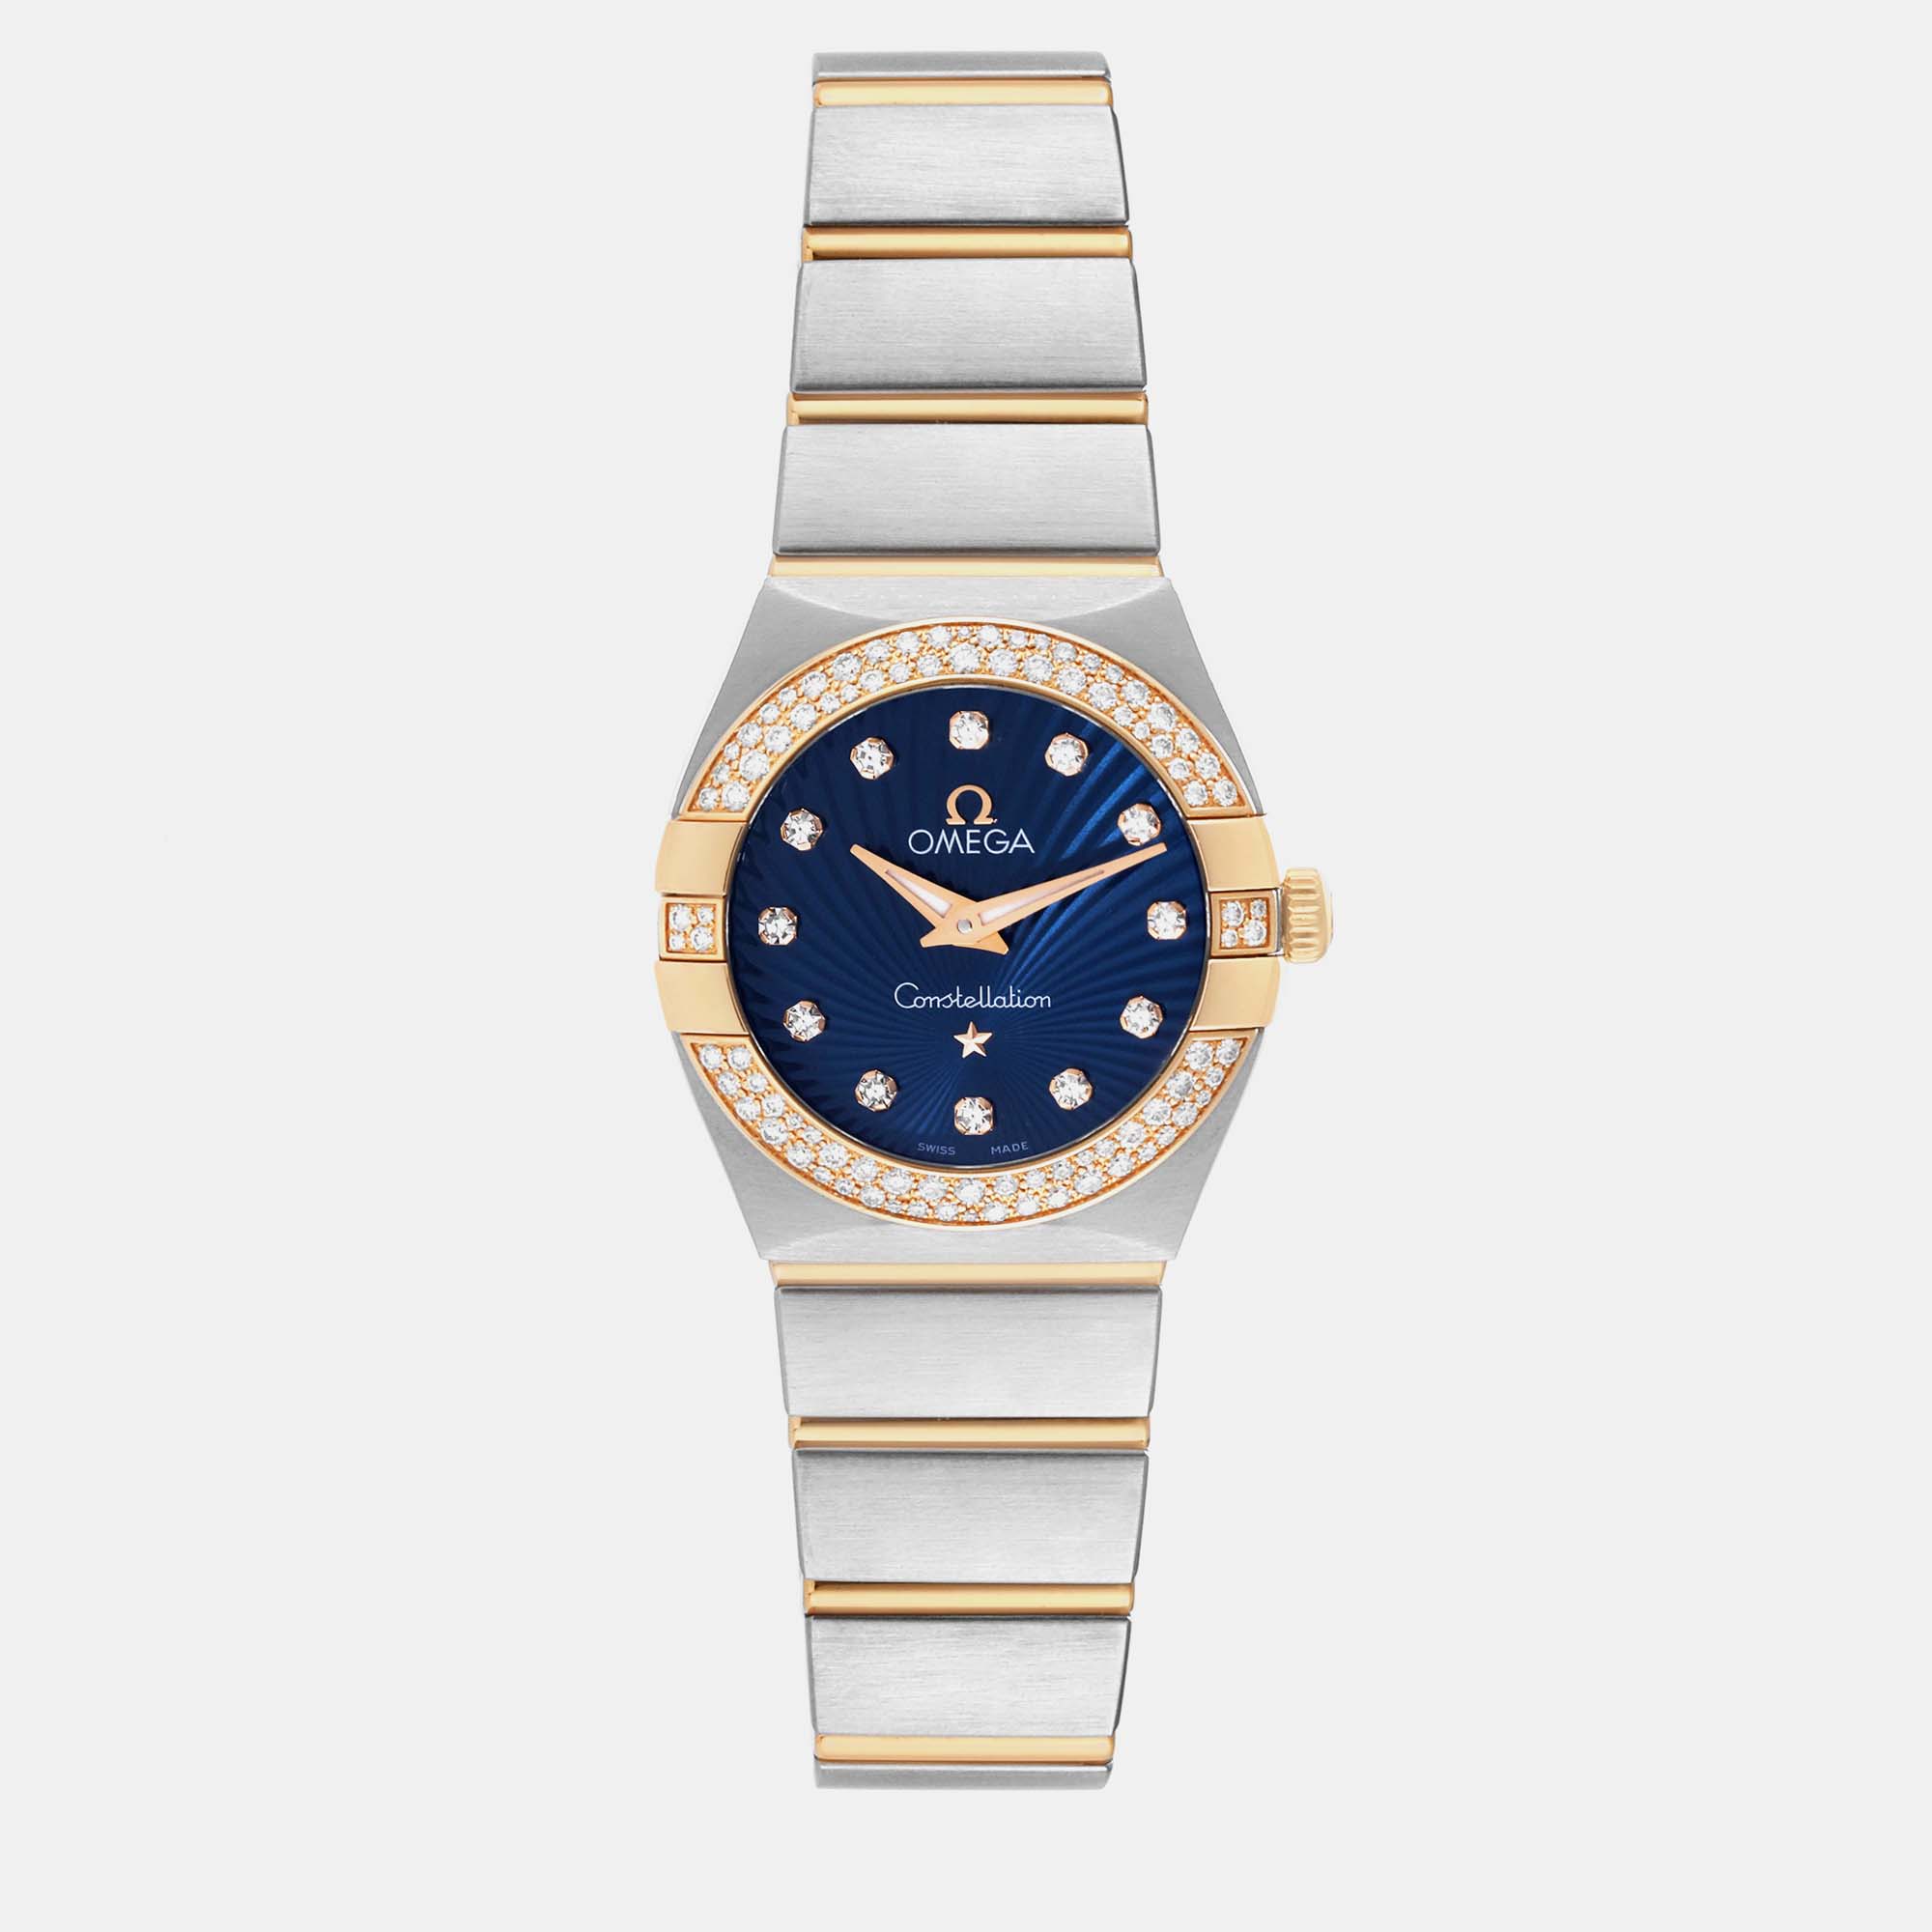 Omega blue diamond 18k rose gold and stainless steel constellation 123.25.24.60.53.001 quartz women's wristwatch 24 mm